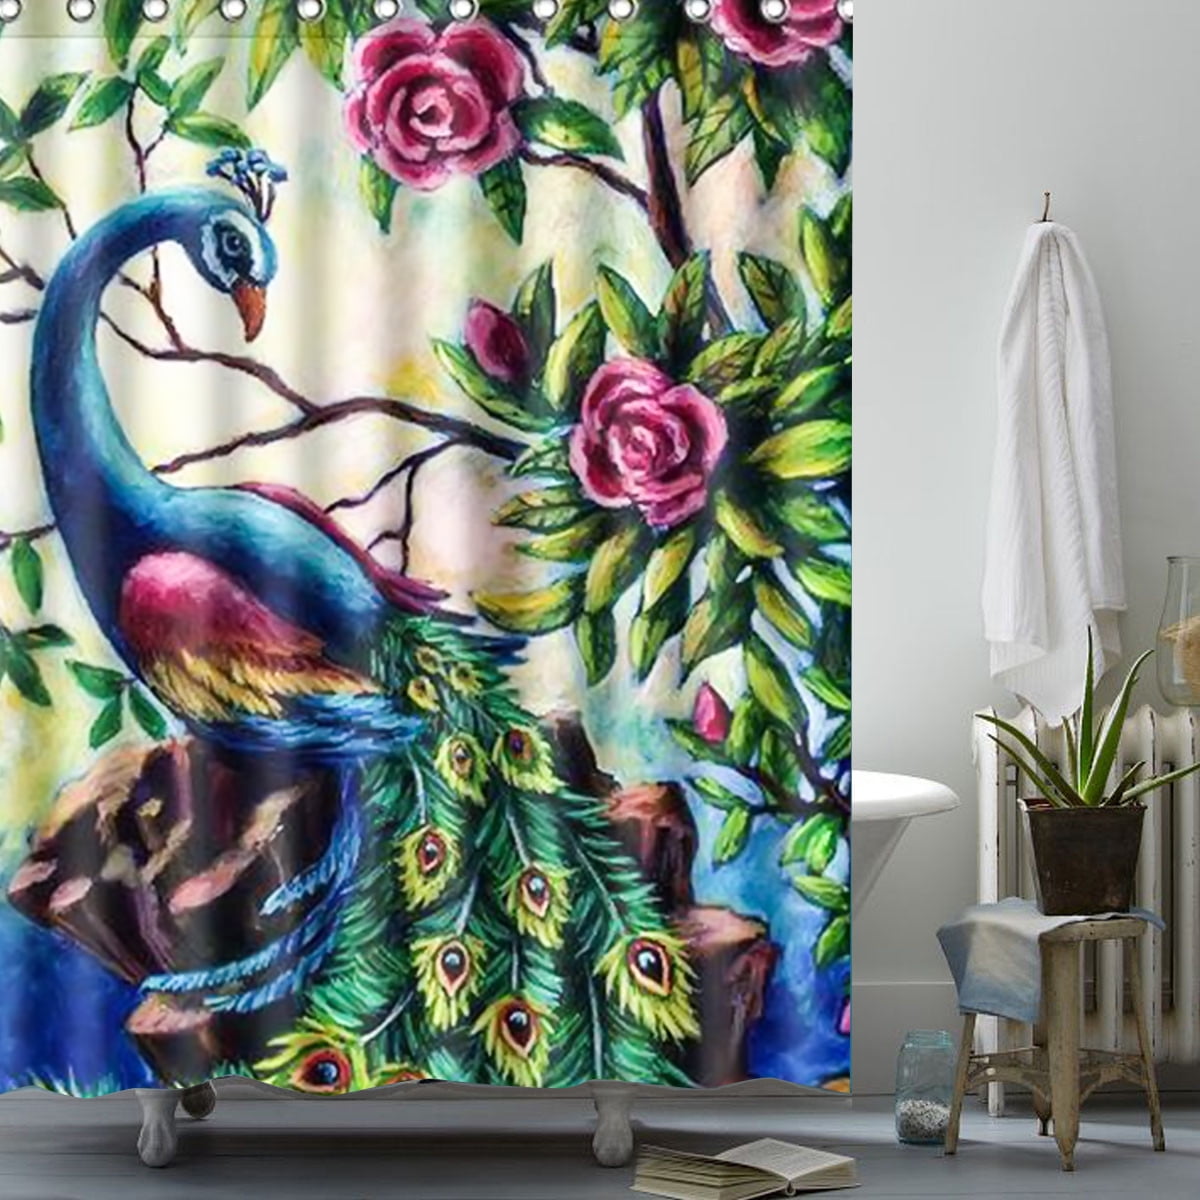 Peacock Open Tail Waterproof Fabric Home Decor Liner Shower Curtain Bathroom Mat 